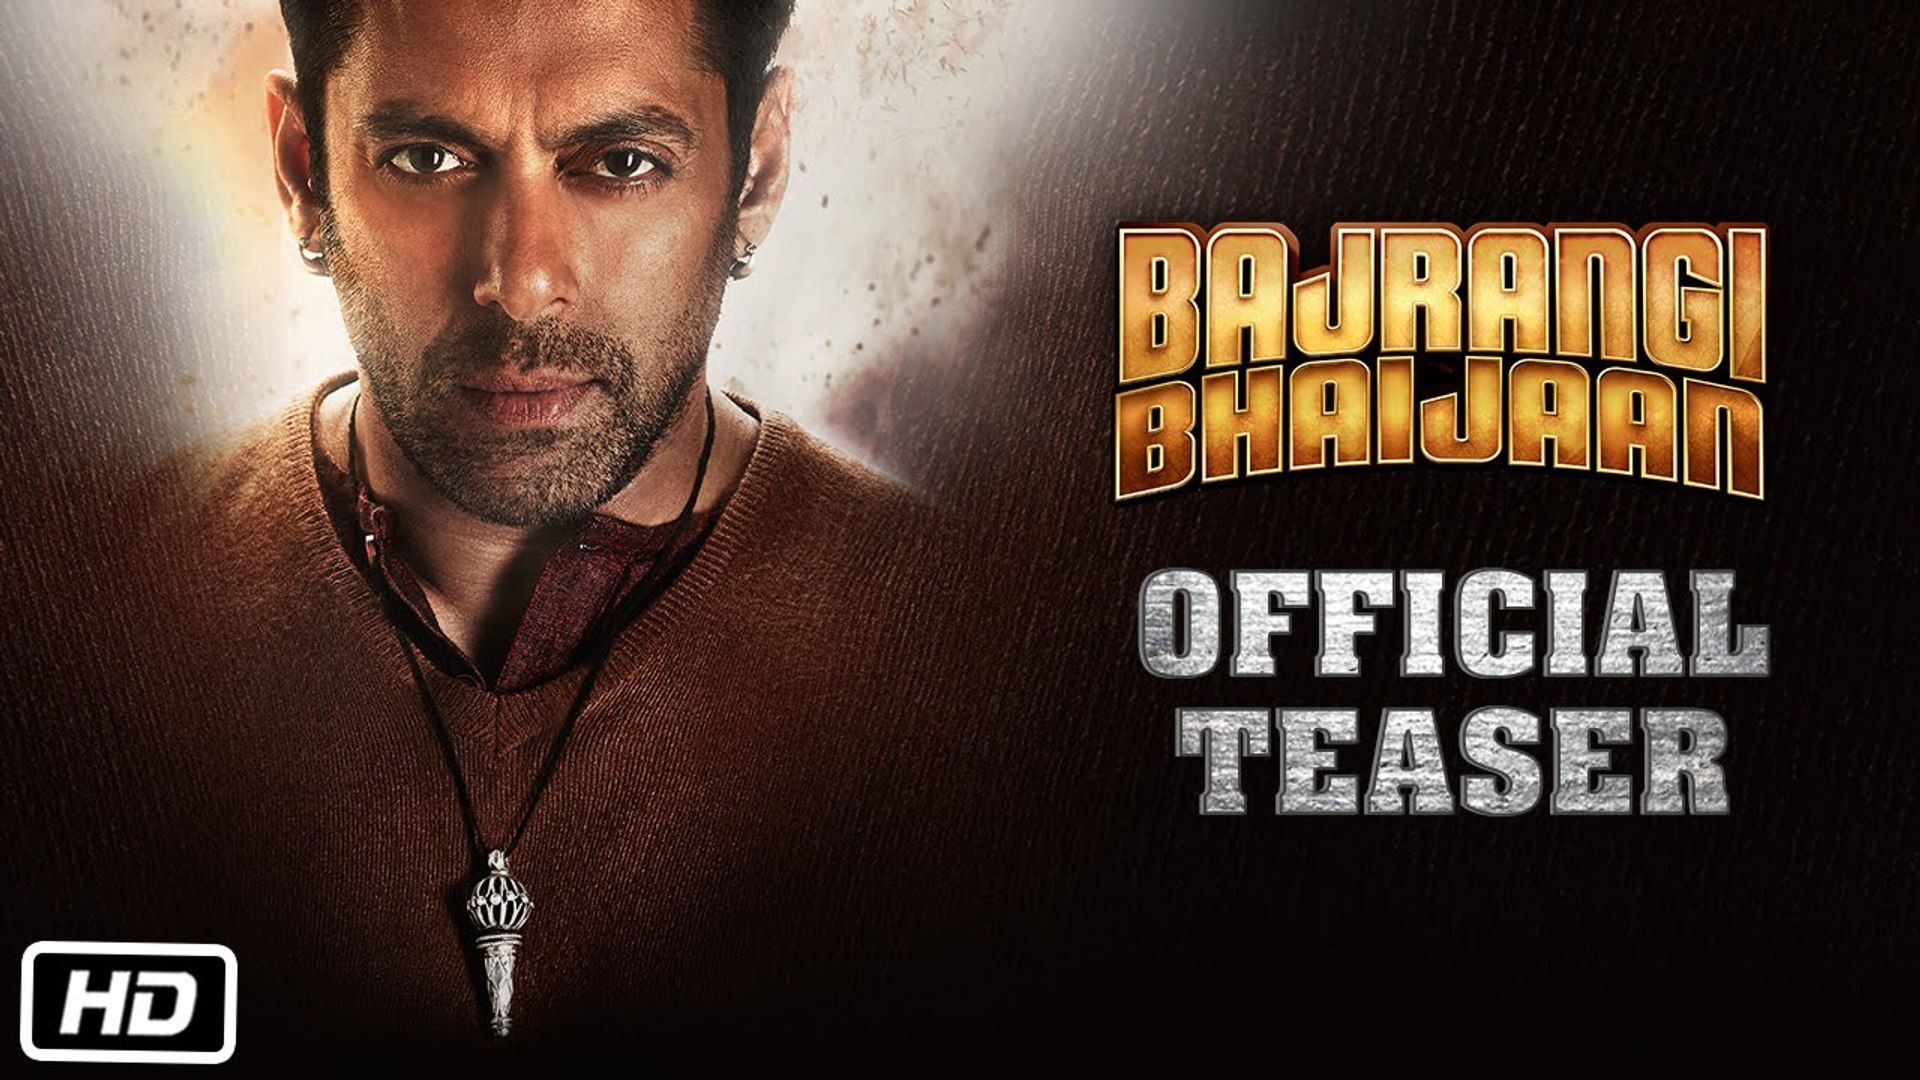 Bajrangi Bhaijaan Official TEASER Full HD 2015. Salman Khan